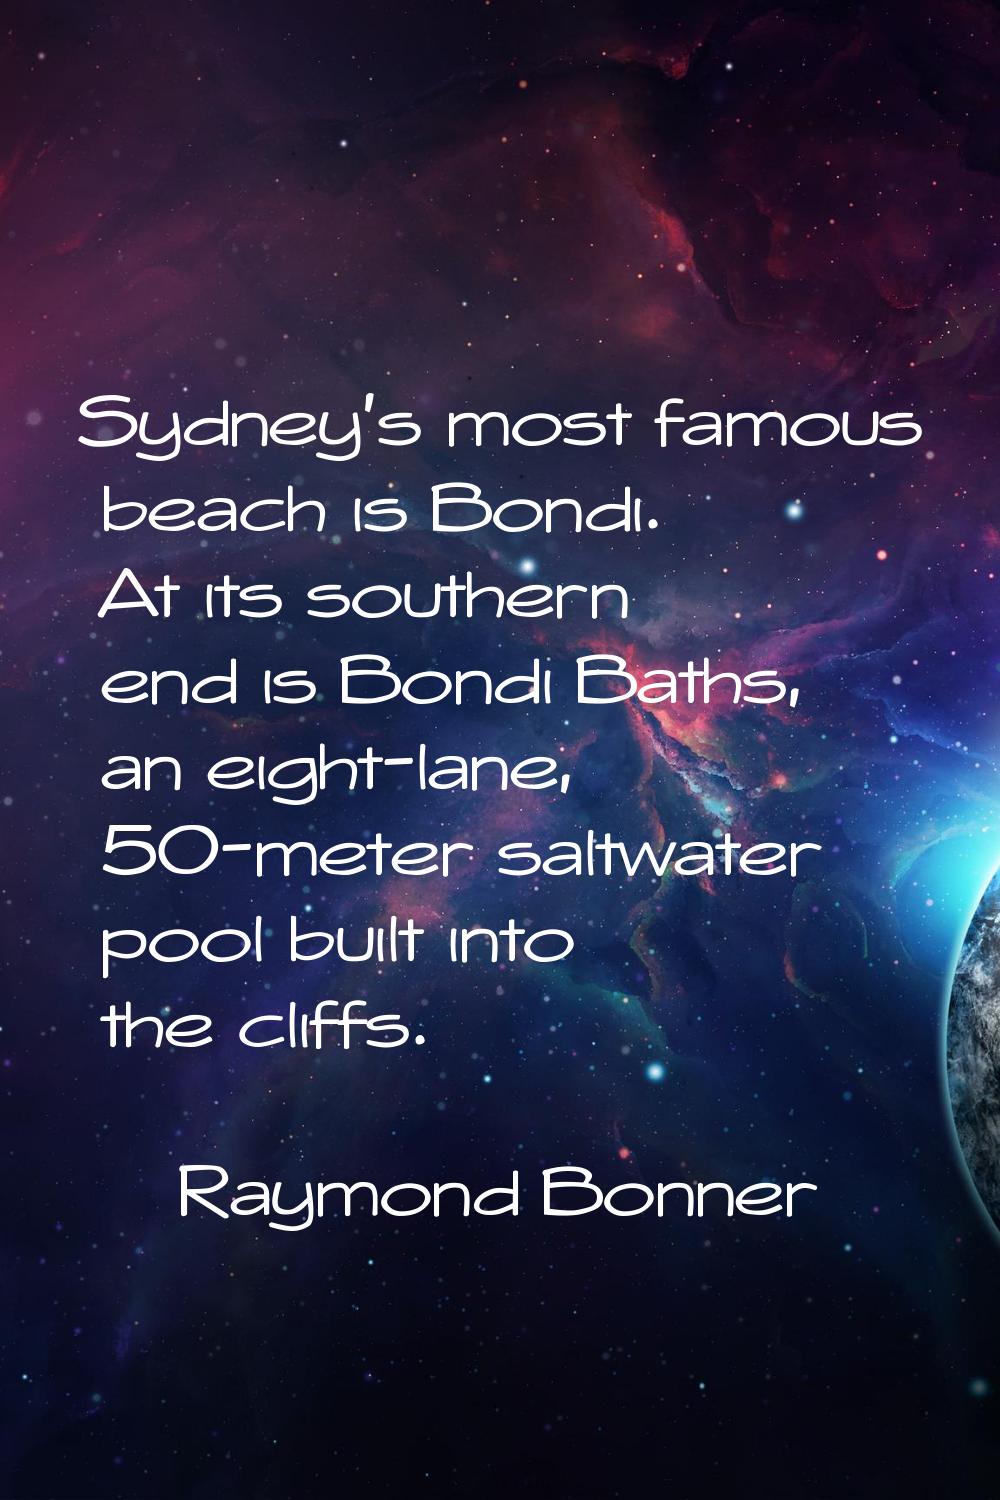 Sydney's most famous beach is Bondi. At its southern end is Bondi Baths, an eight-lane, 50-meter sa